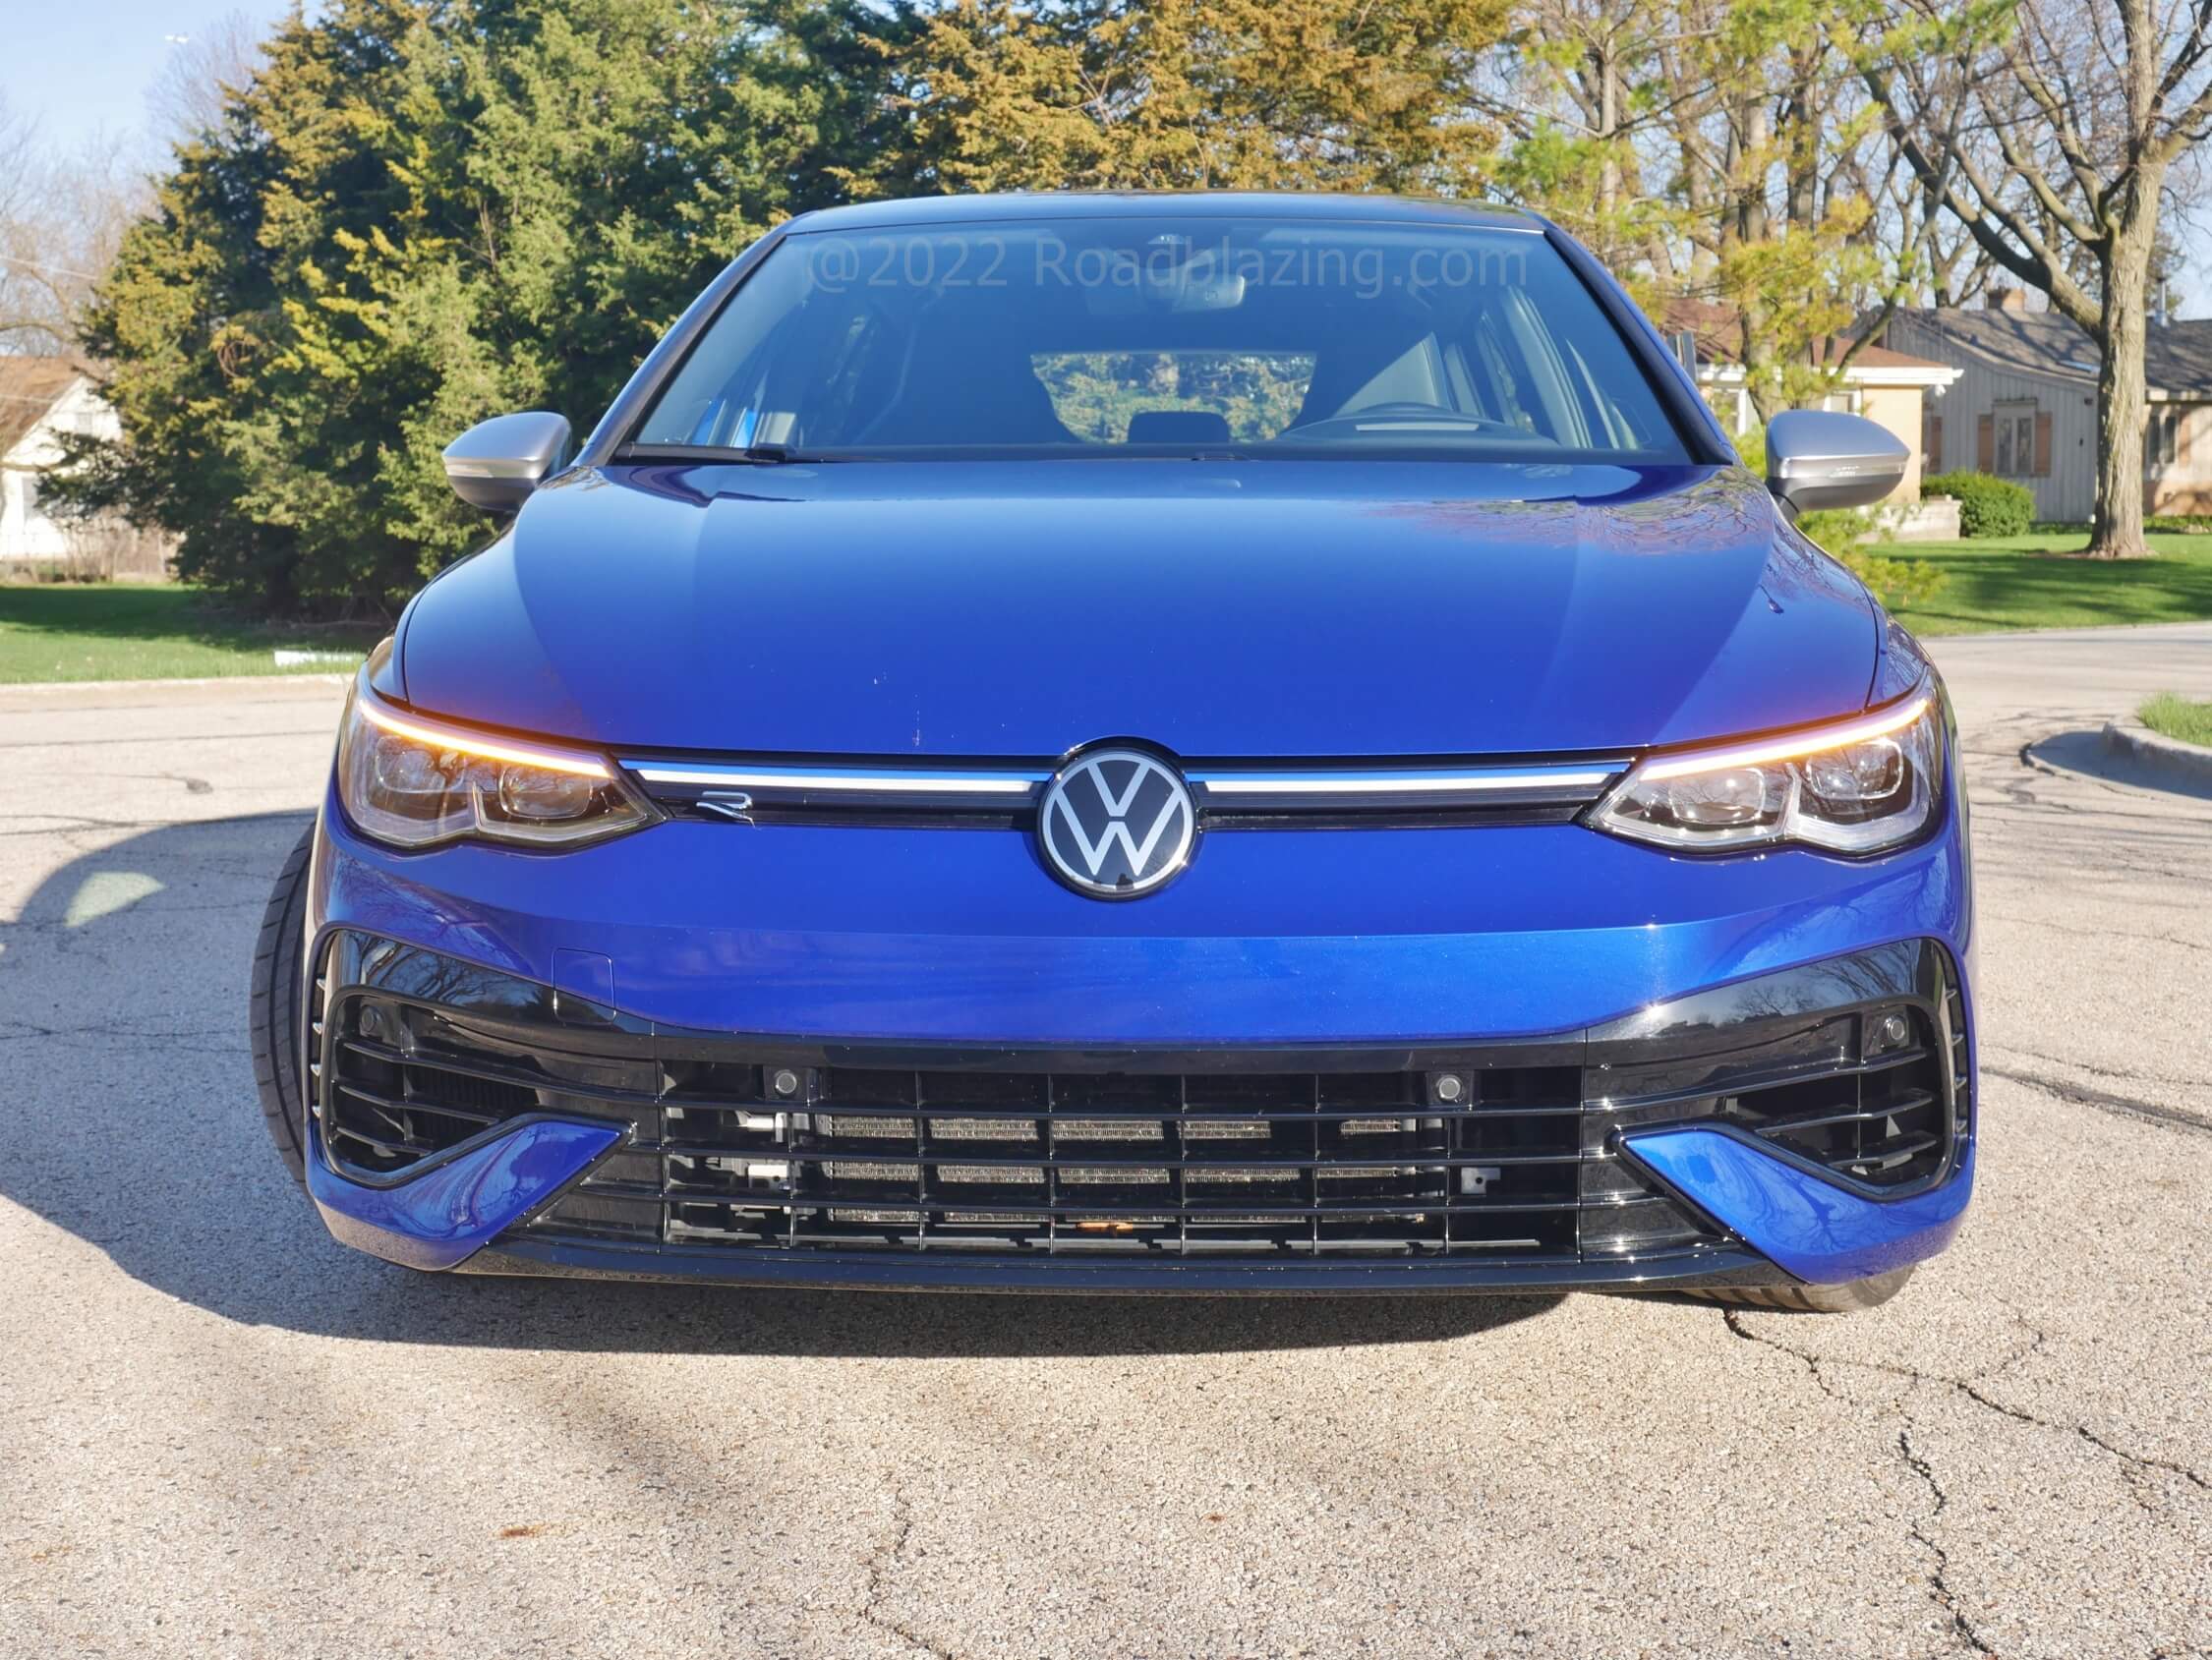 2022 Volkswagen Golf R: wispy new upper front details, including illuminated singular upper grille lateral bar flanked by formidable lower corner folds whisper potential for menace